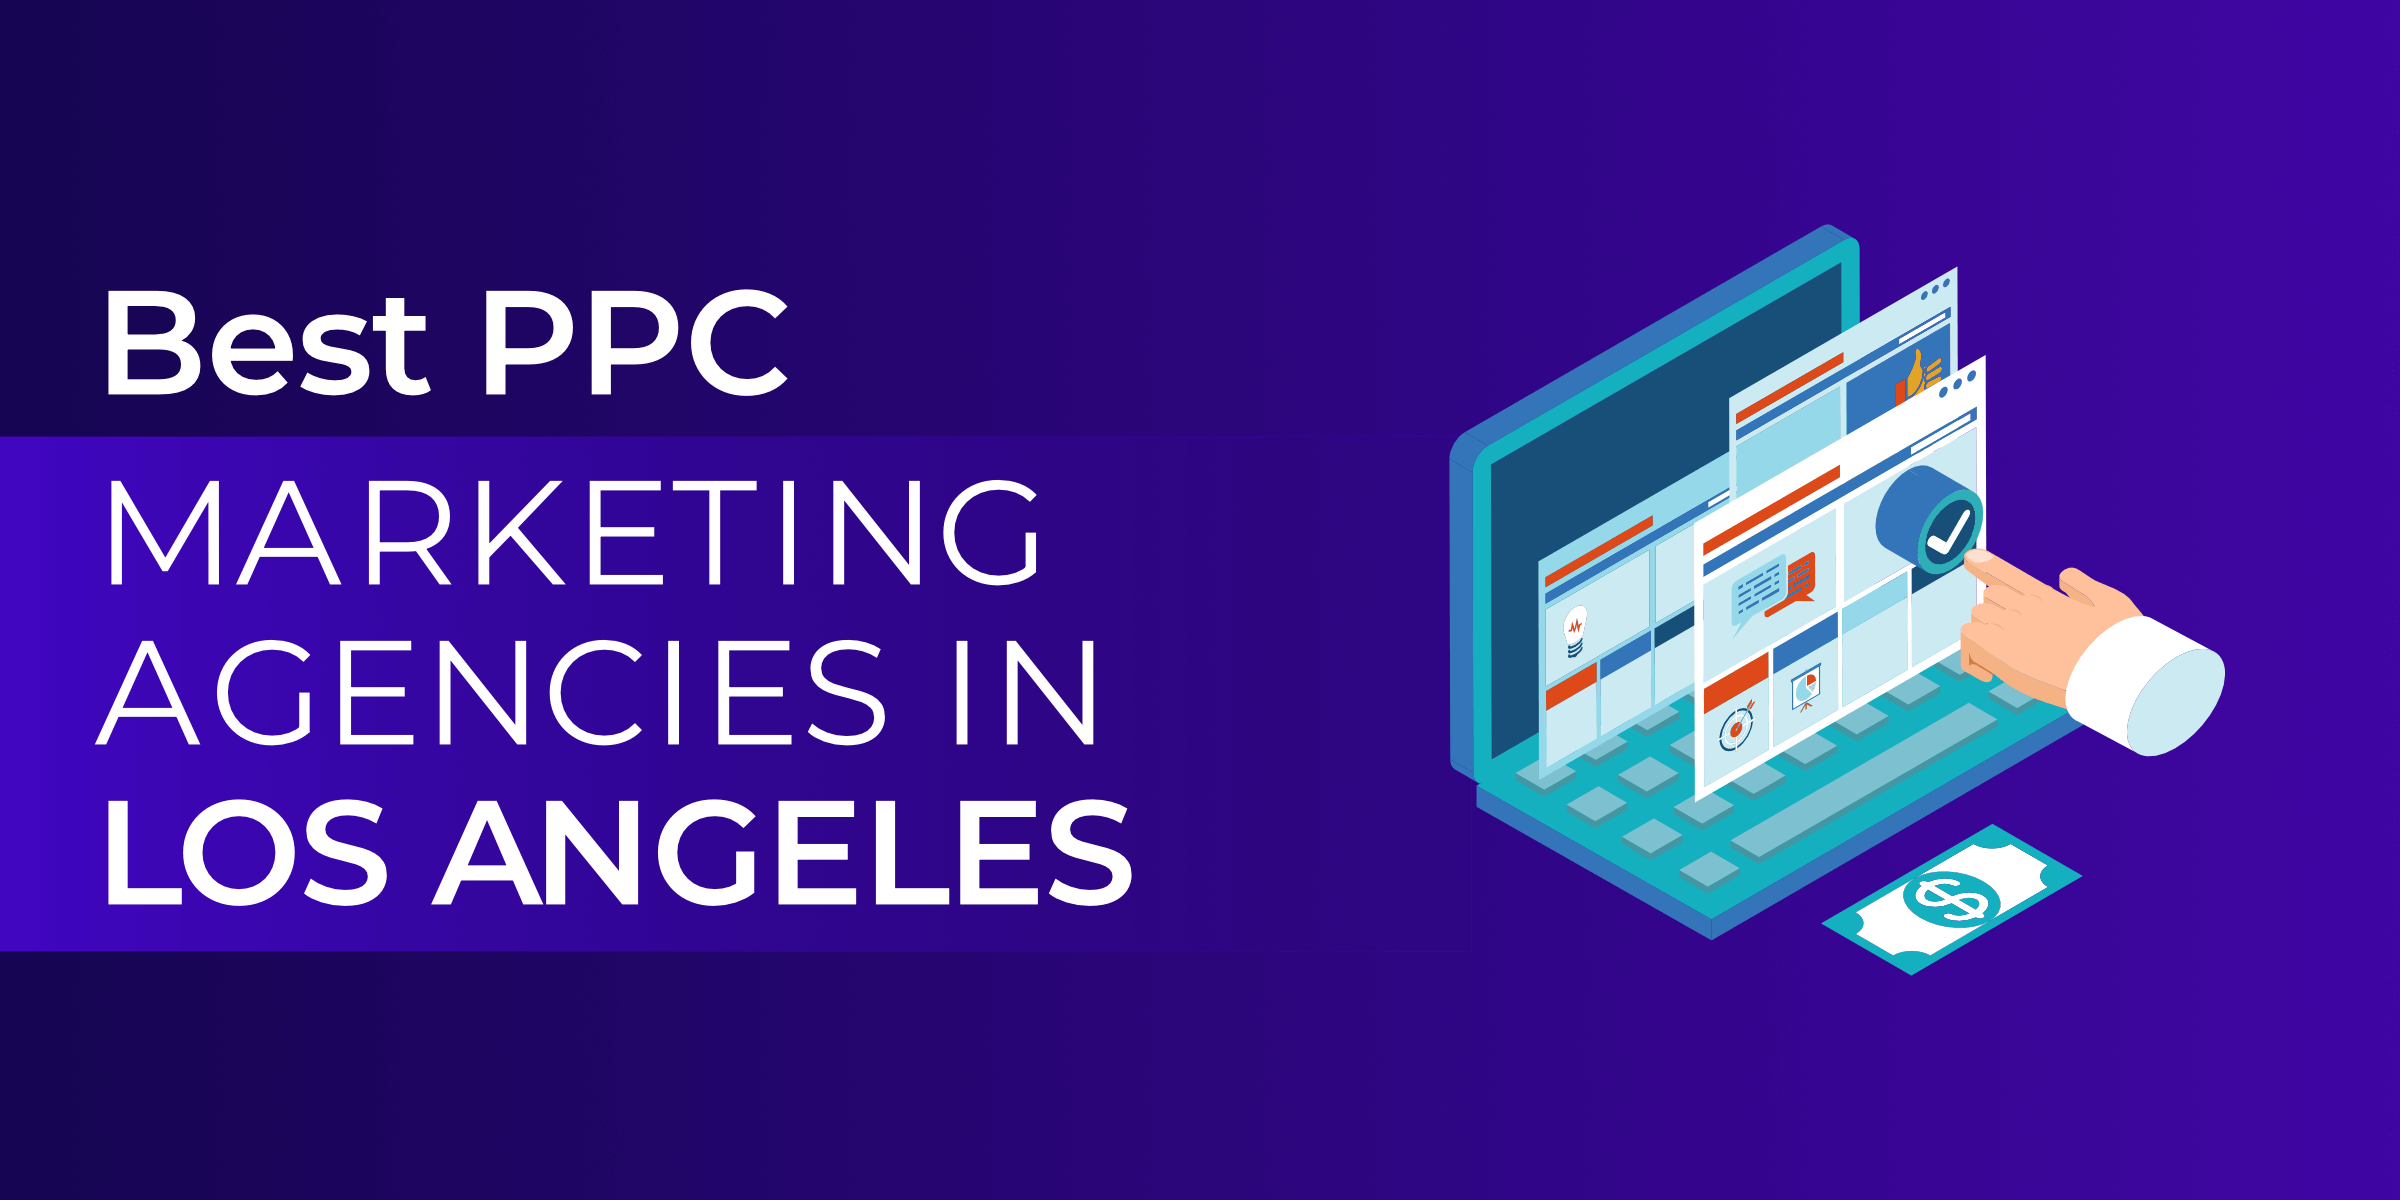 Best PPC Marketing Agencies in Los Angeles